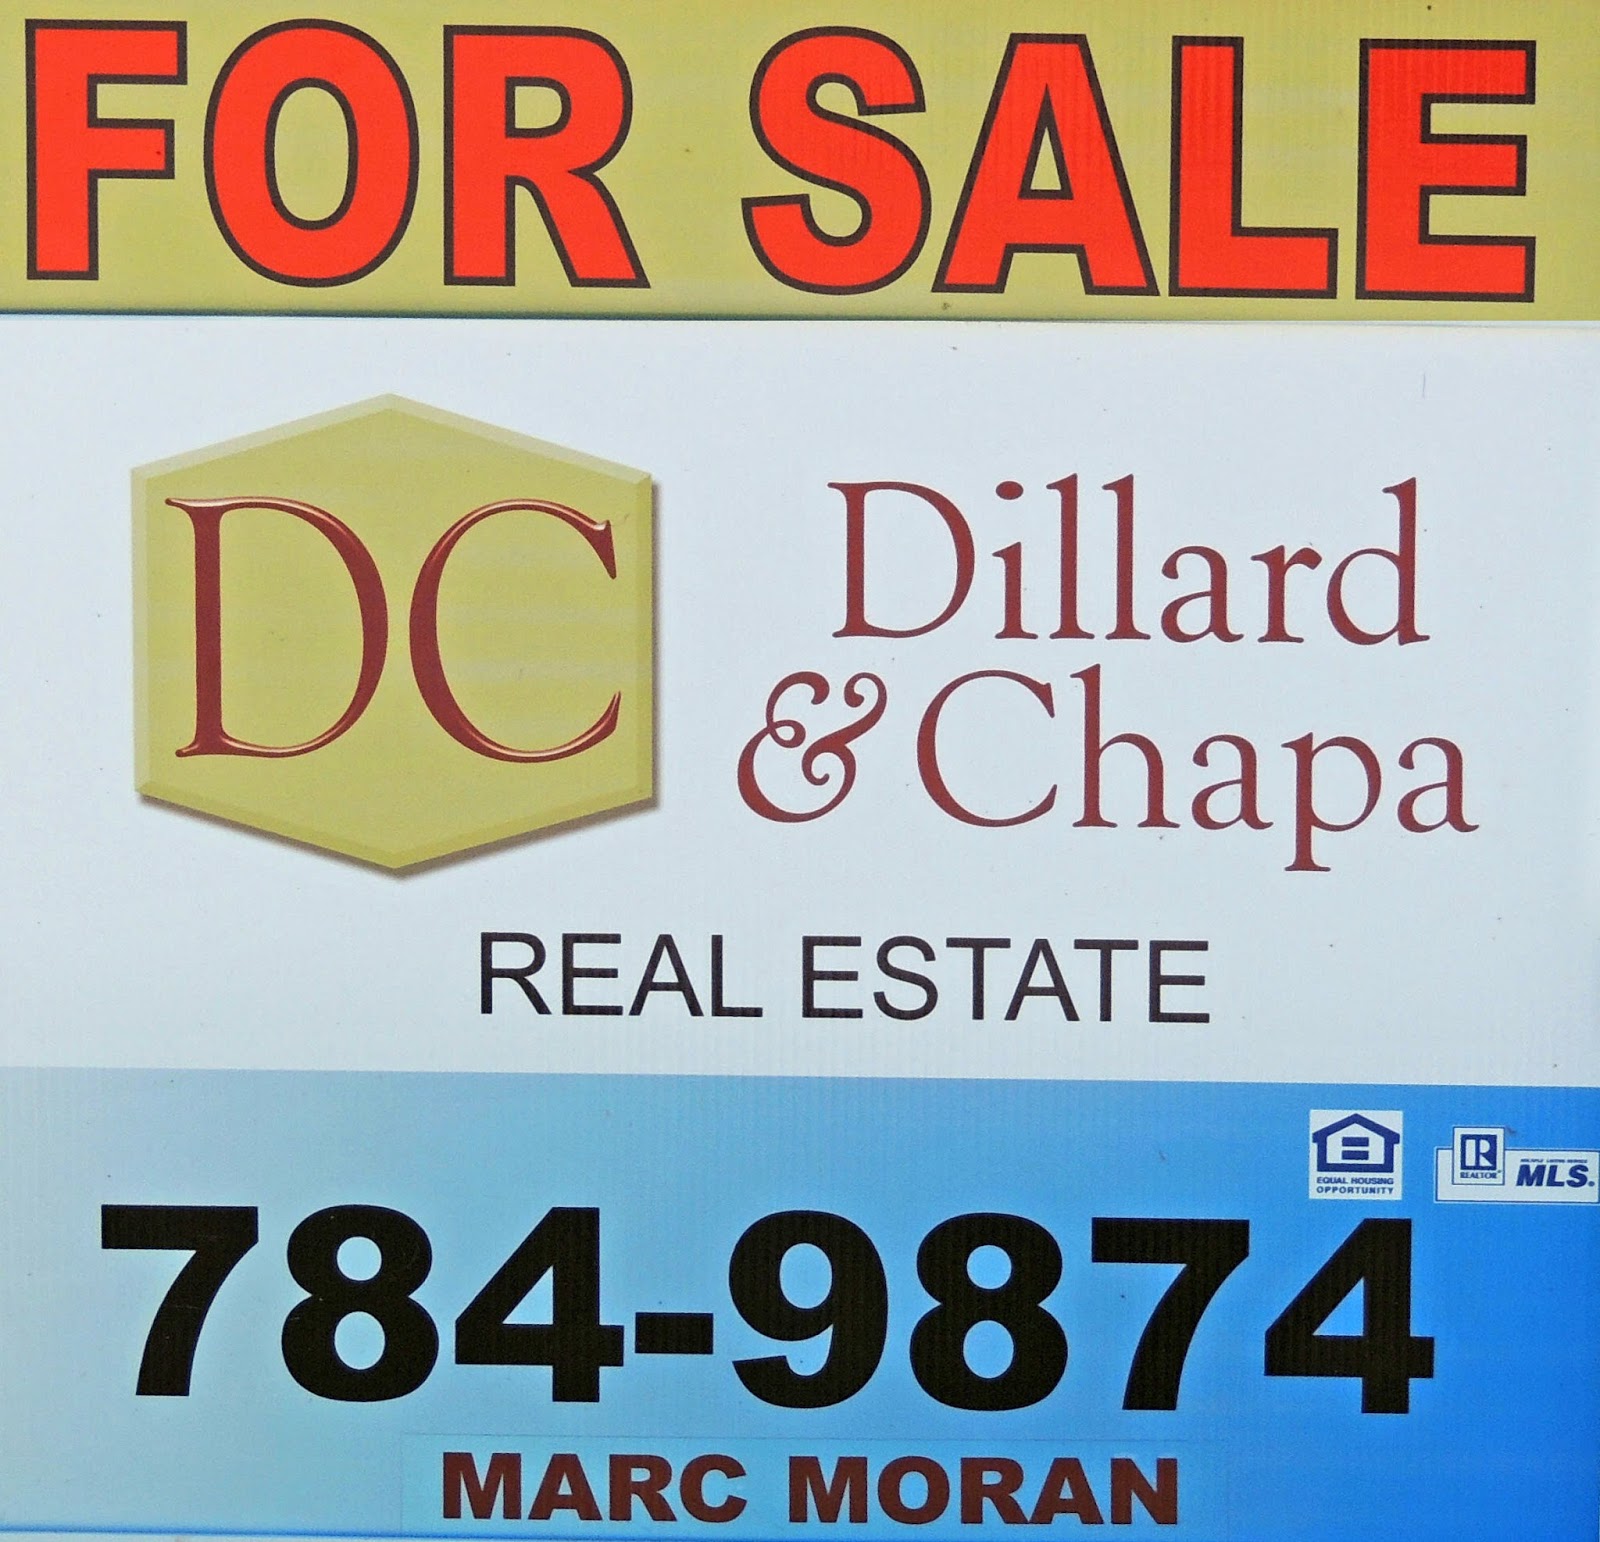 Homes For Sale McAllen | McAllen Real Estate: Rental Property